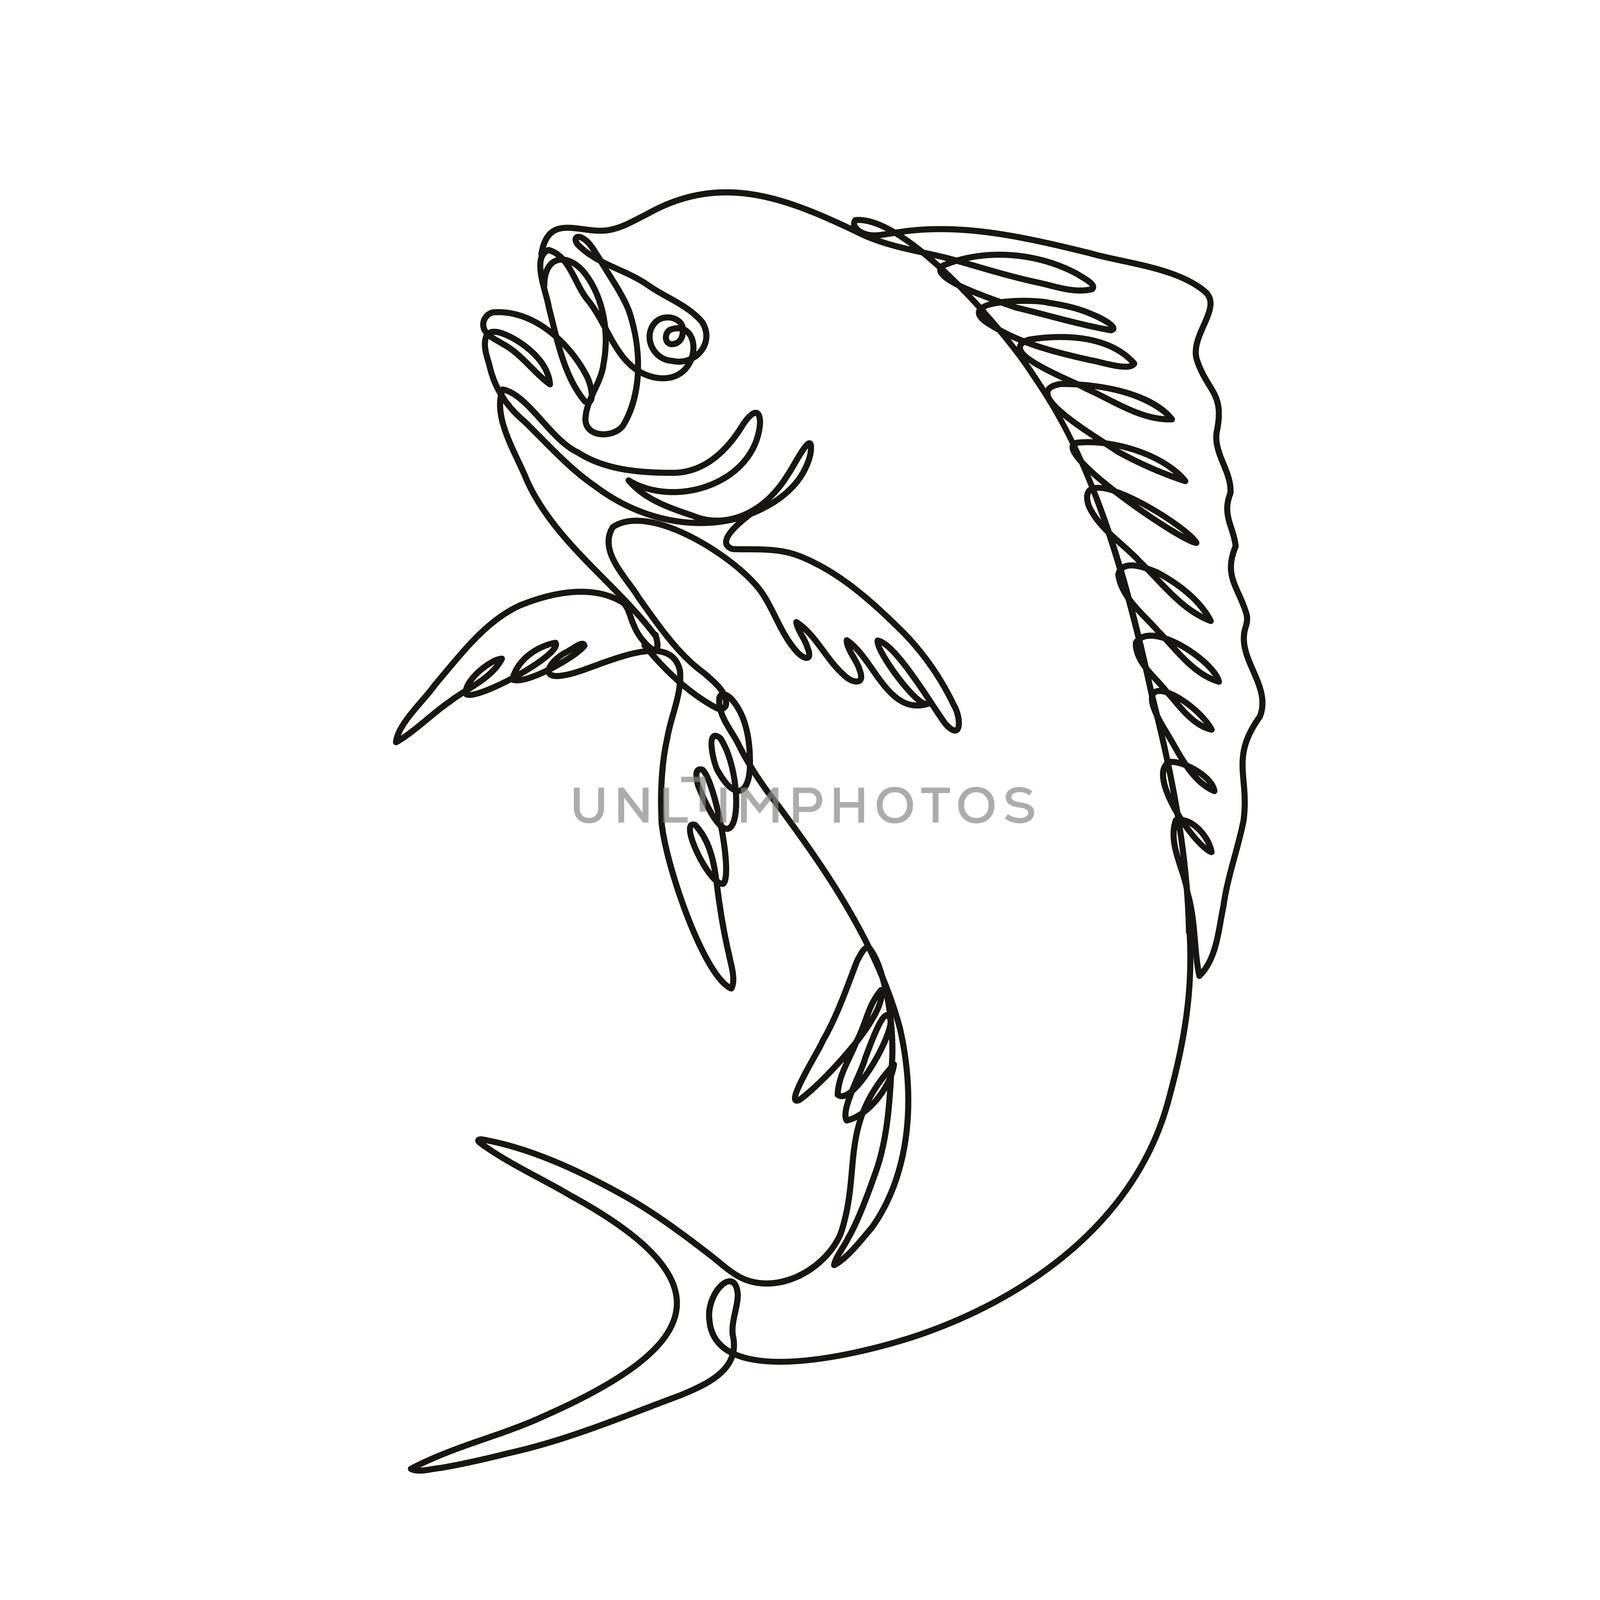 Dorado Dolphin Fish or Mahi Mahi Jumping Up Continuous Line Drawing  by patrimonio